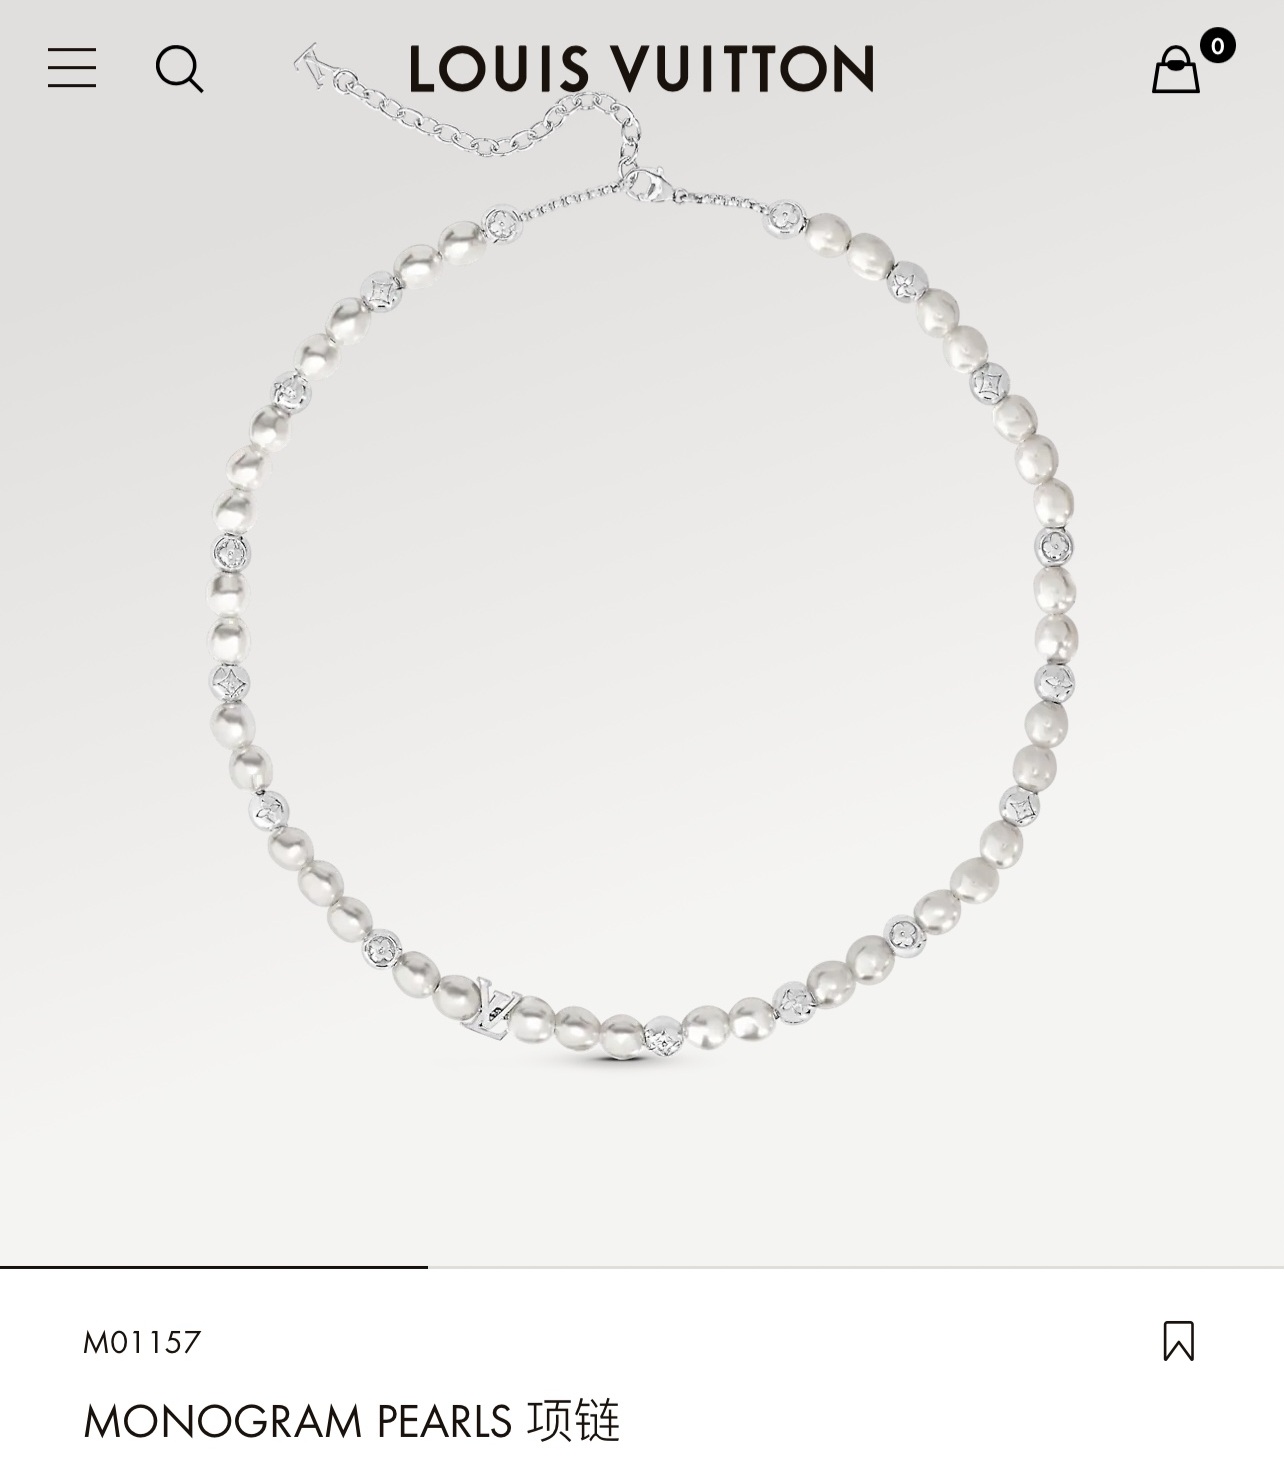 LV monogram pearls necklace